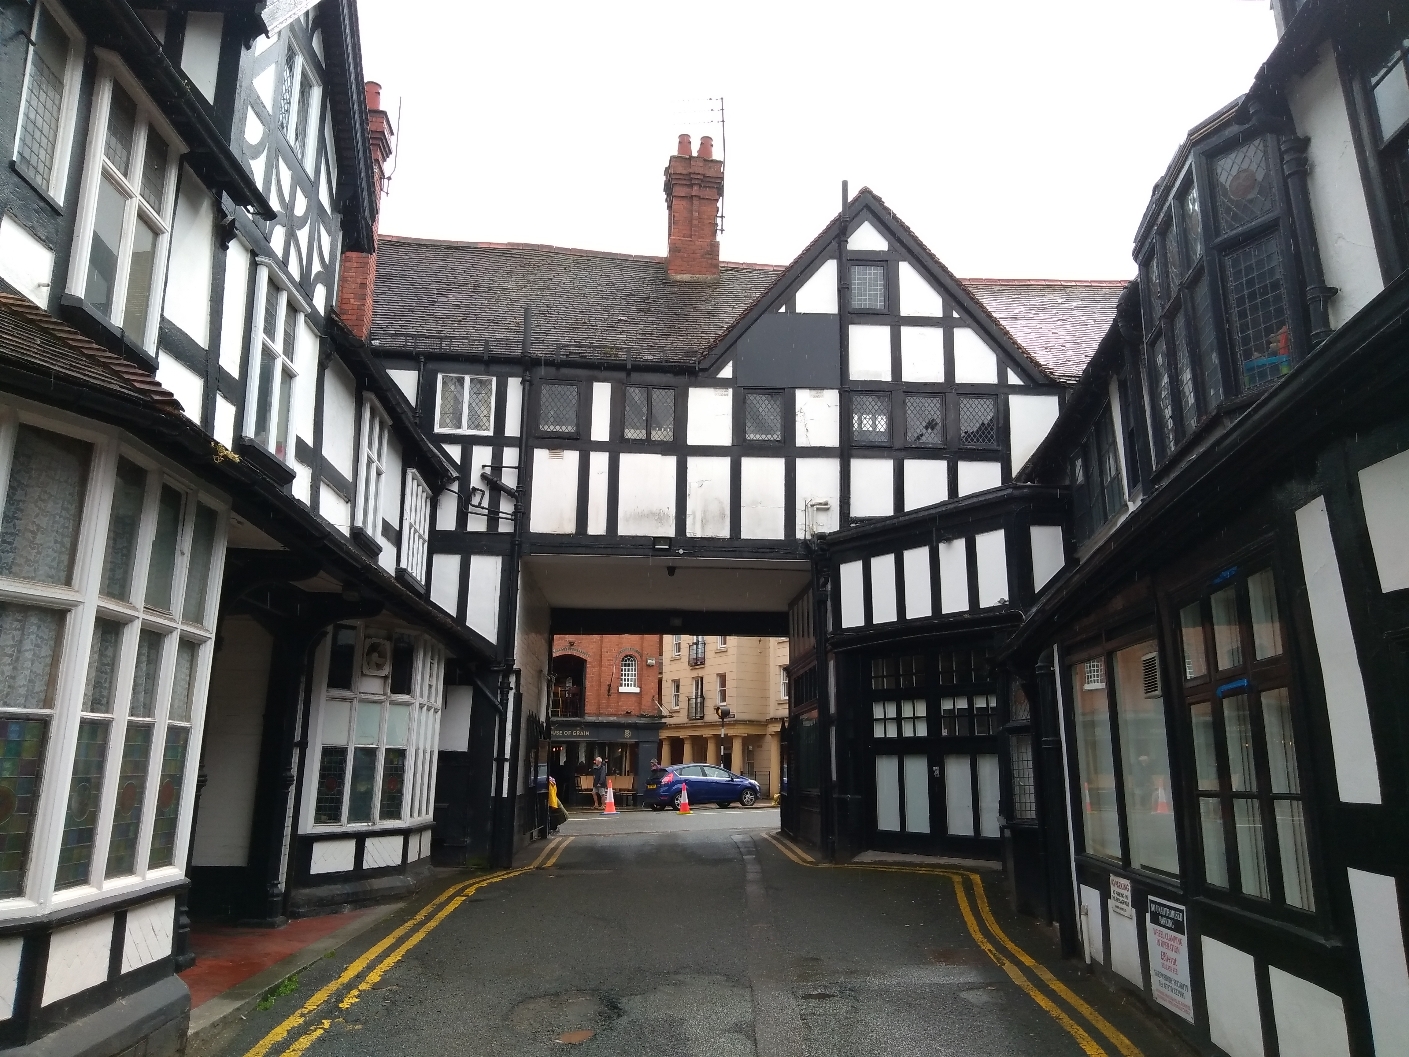 Shrewsbury Medieval Inn